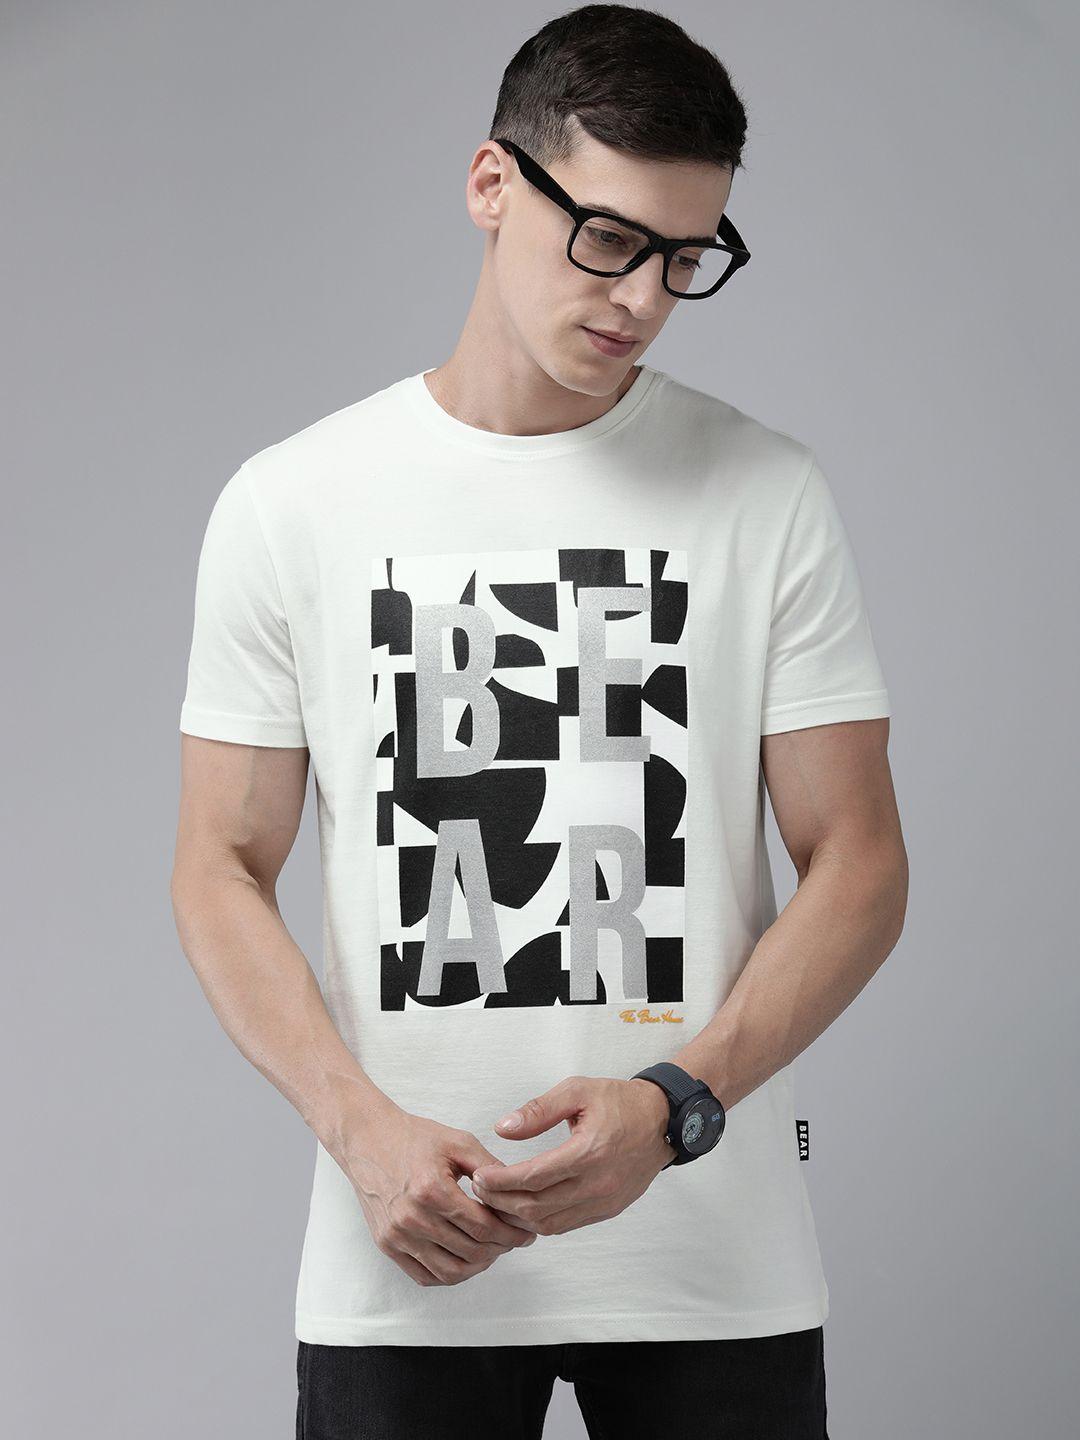 the bear house men white & black printed pure cotton slim fit t-shirt